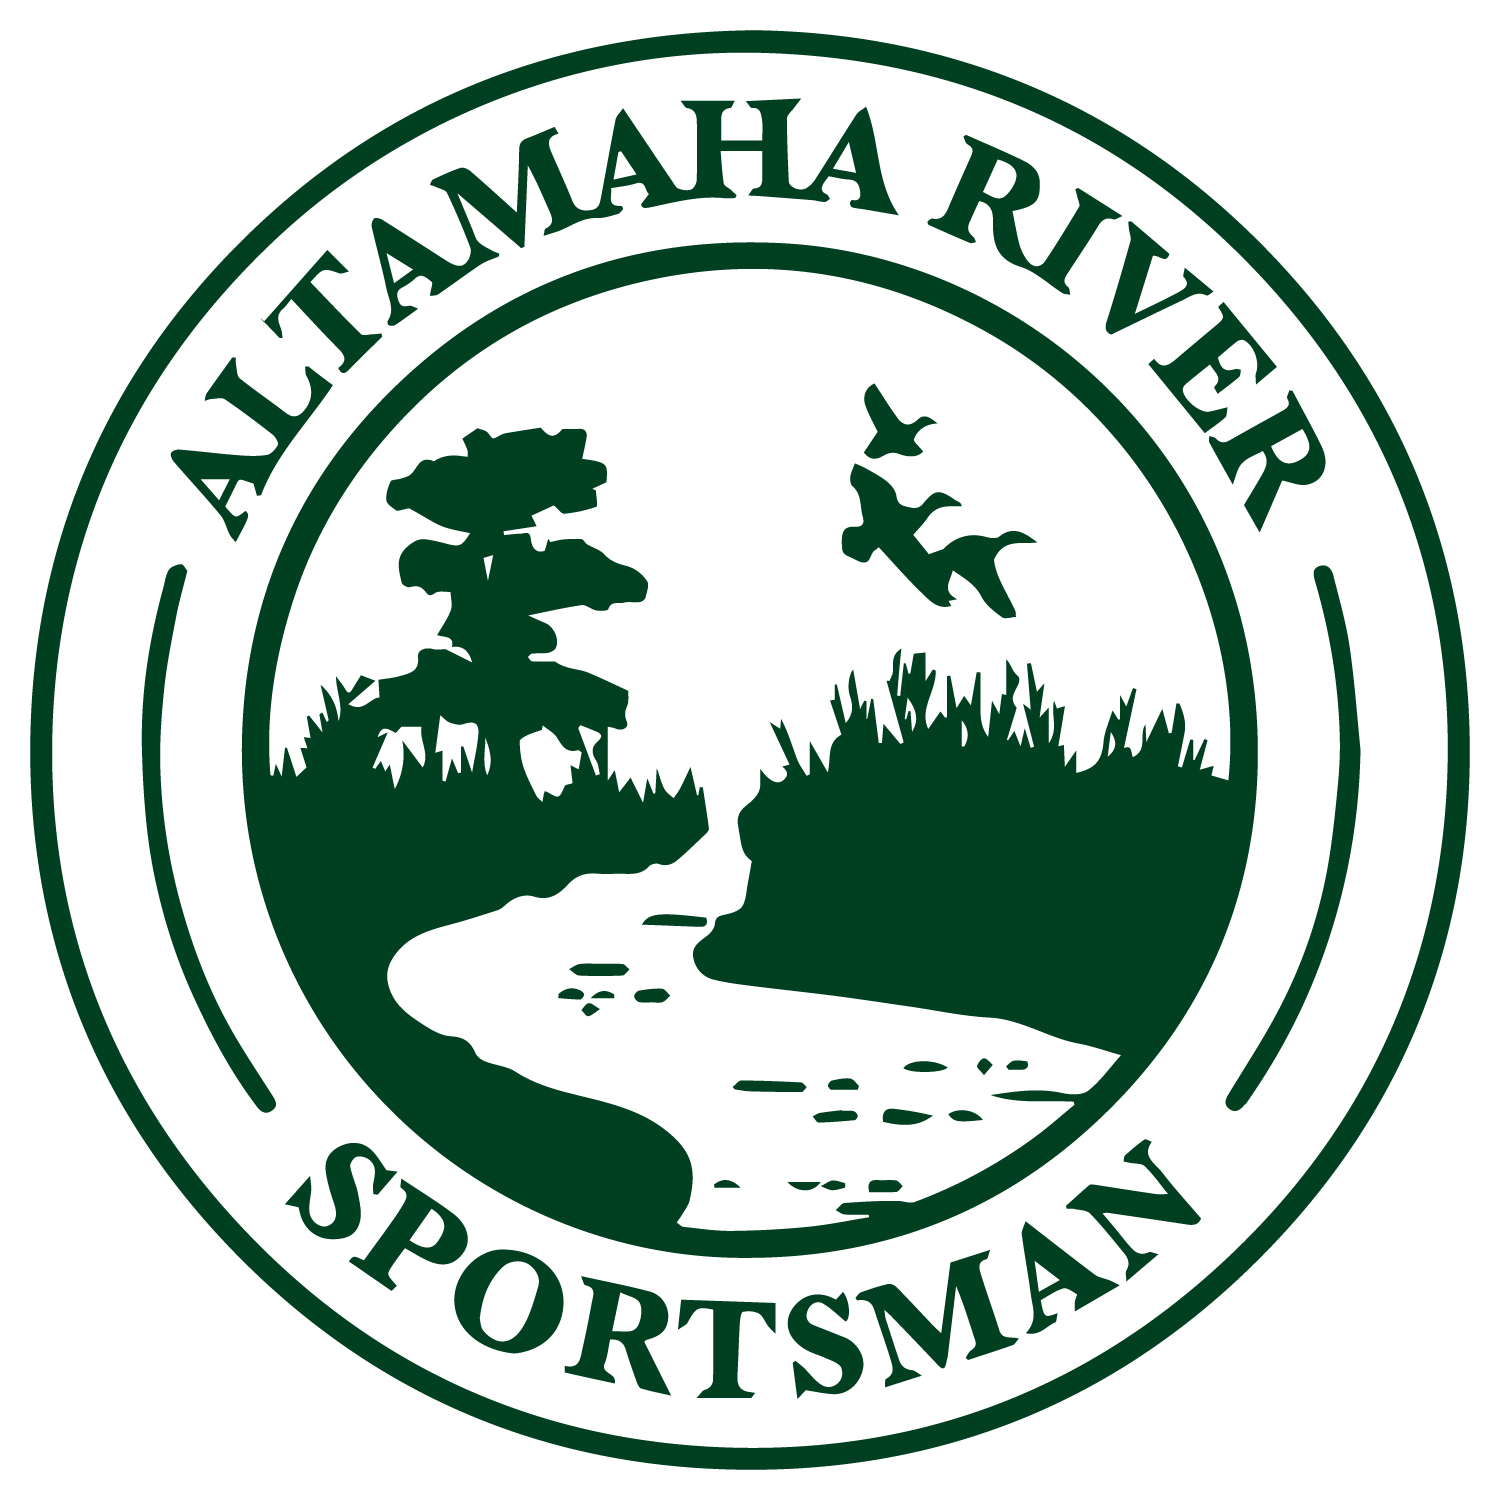 Altamaha River Sportsman